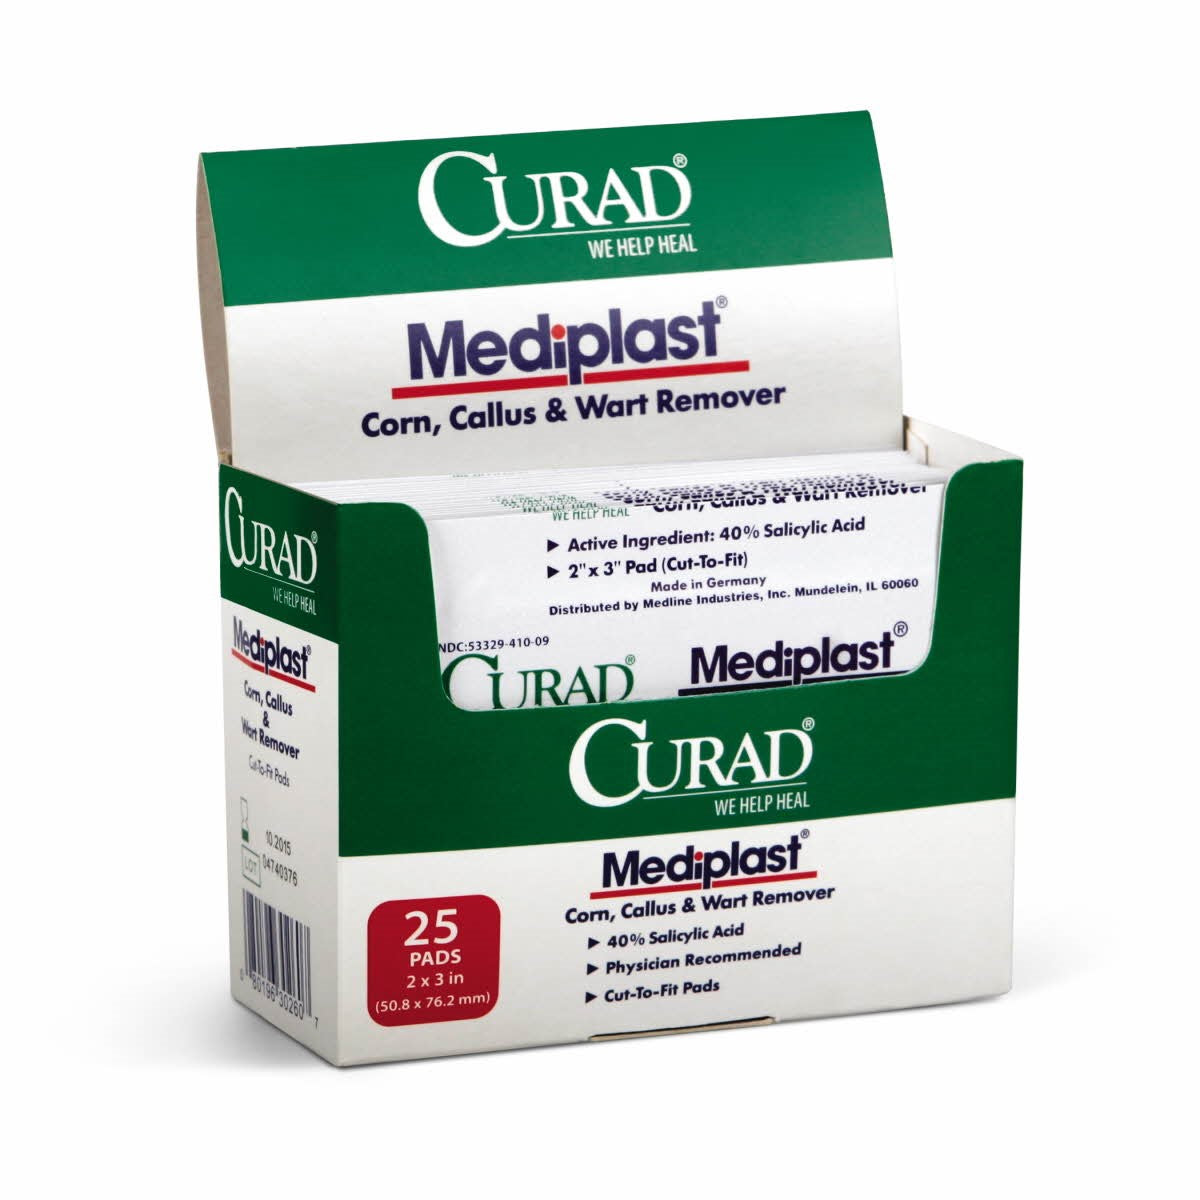  Citri-Med Natural Citrus Medical Adhesive Remover